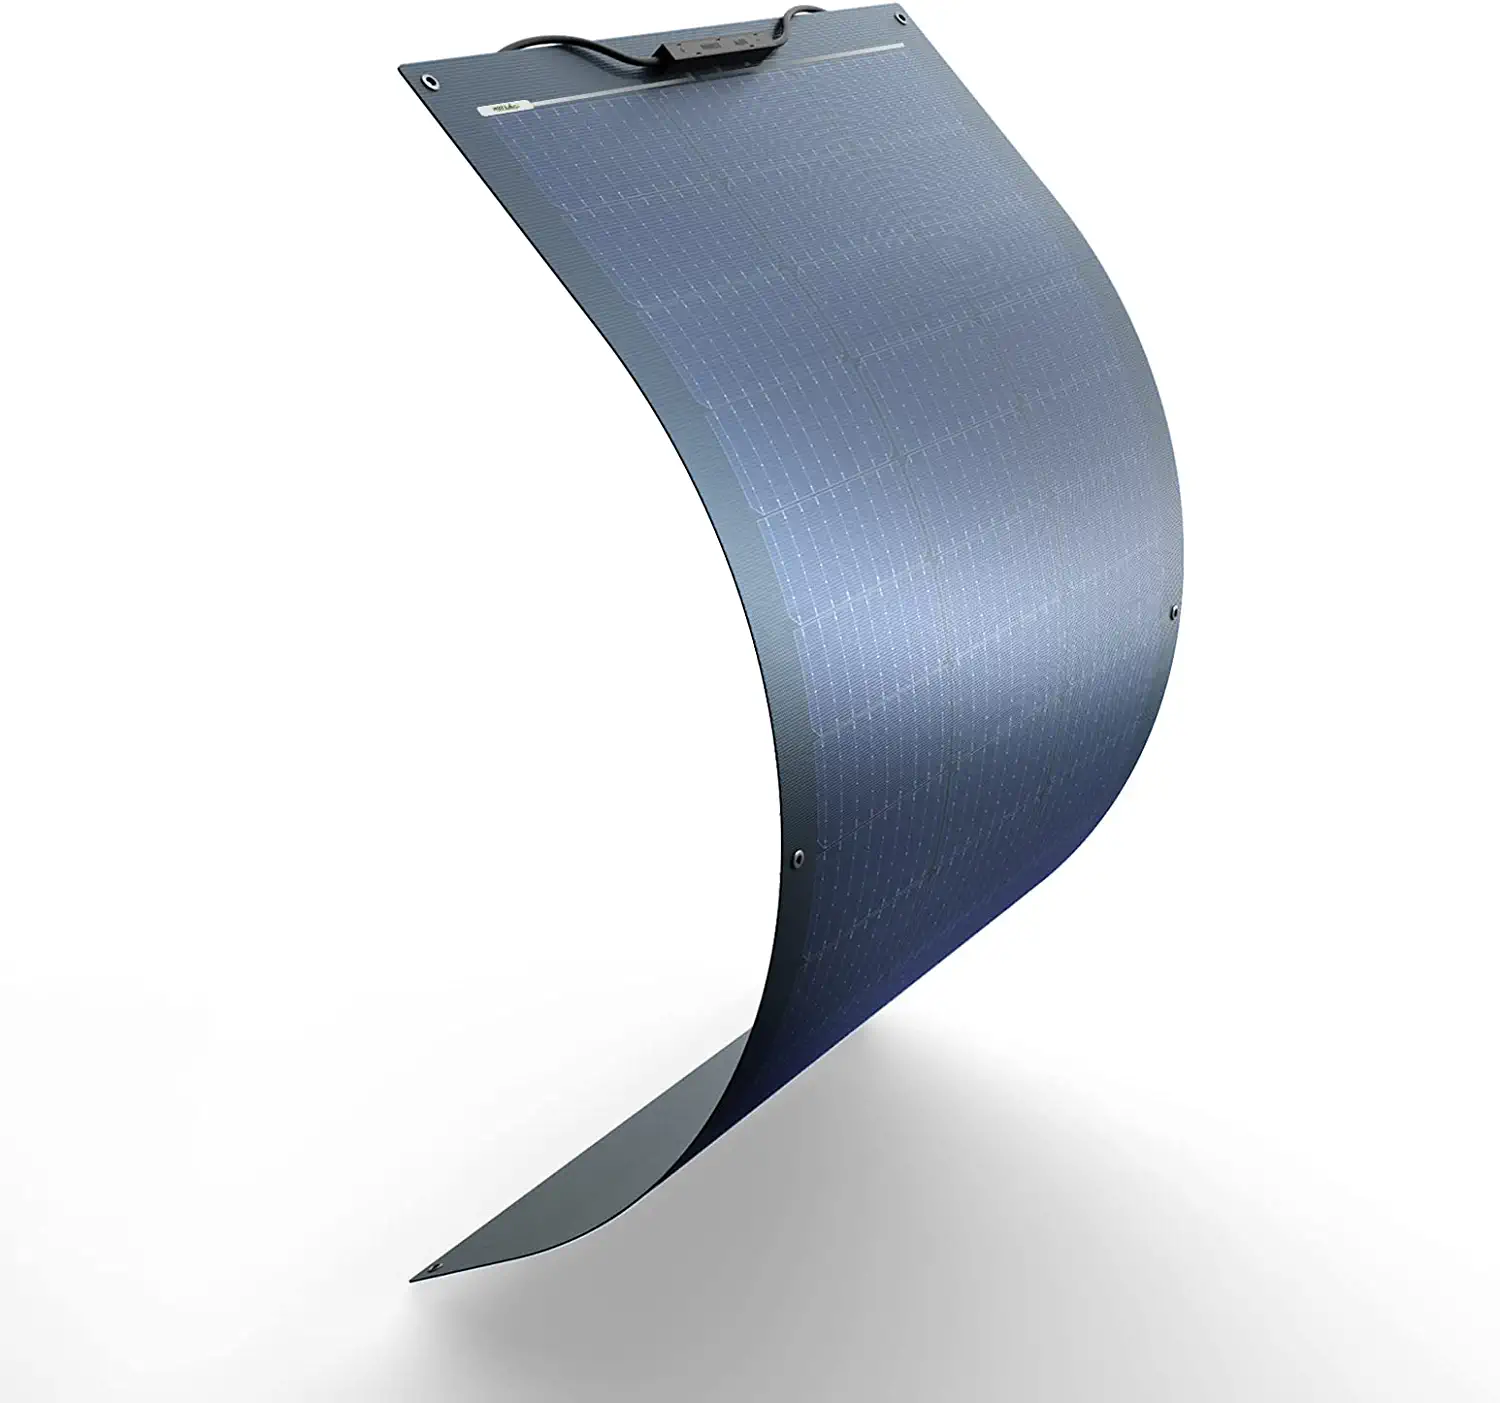 HQST flexible solar panel